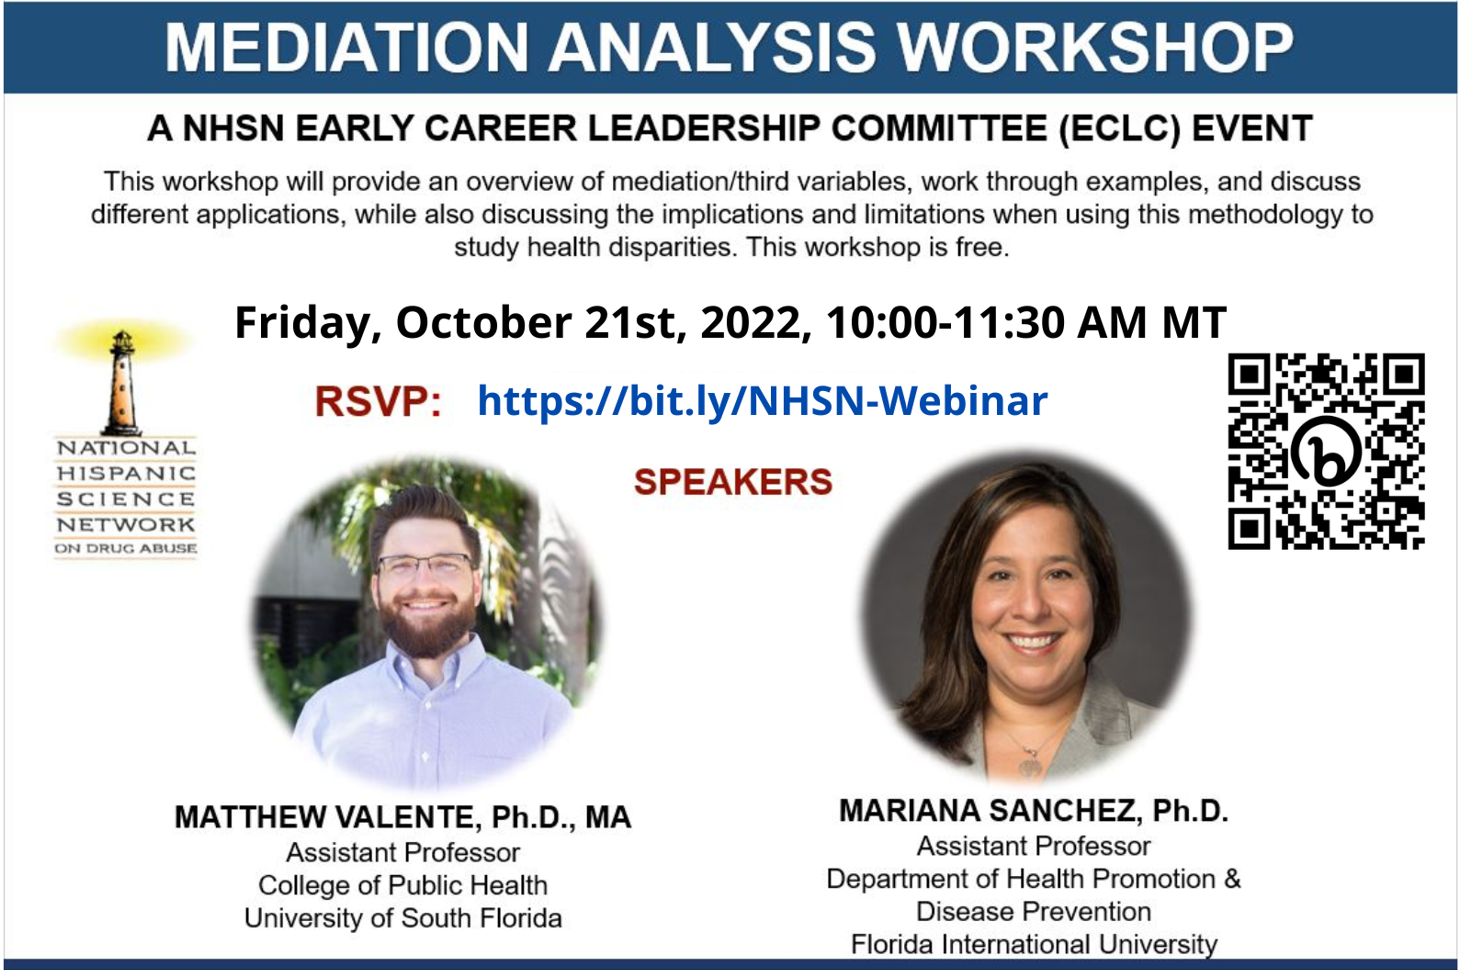 Mediation Analysis Workshop. Friday, Oct. 21st 2022, 10:00-11:30 AM. RSVP; https://bit.ly/NHSN-Webinar